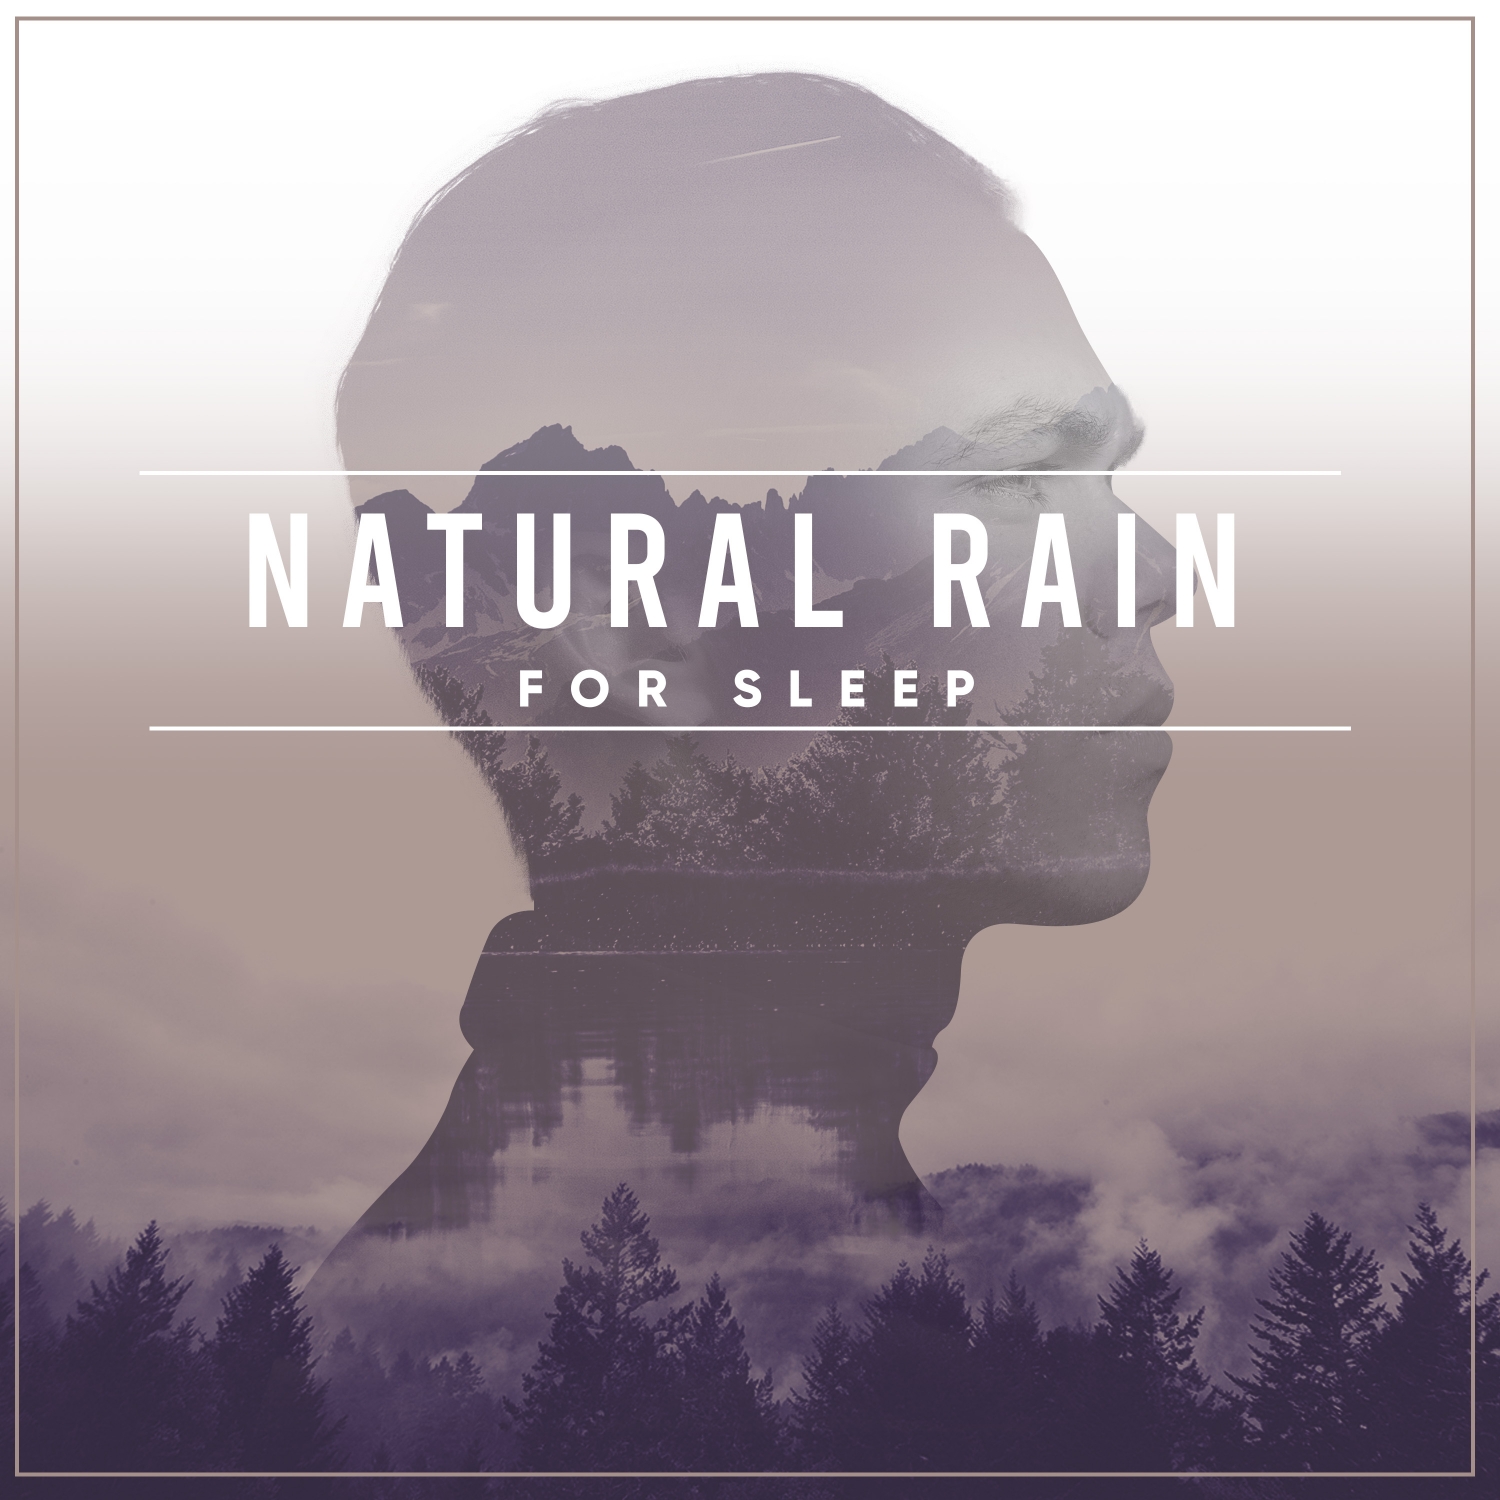 19 Natural Rain Songs to Sleep Easy